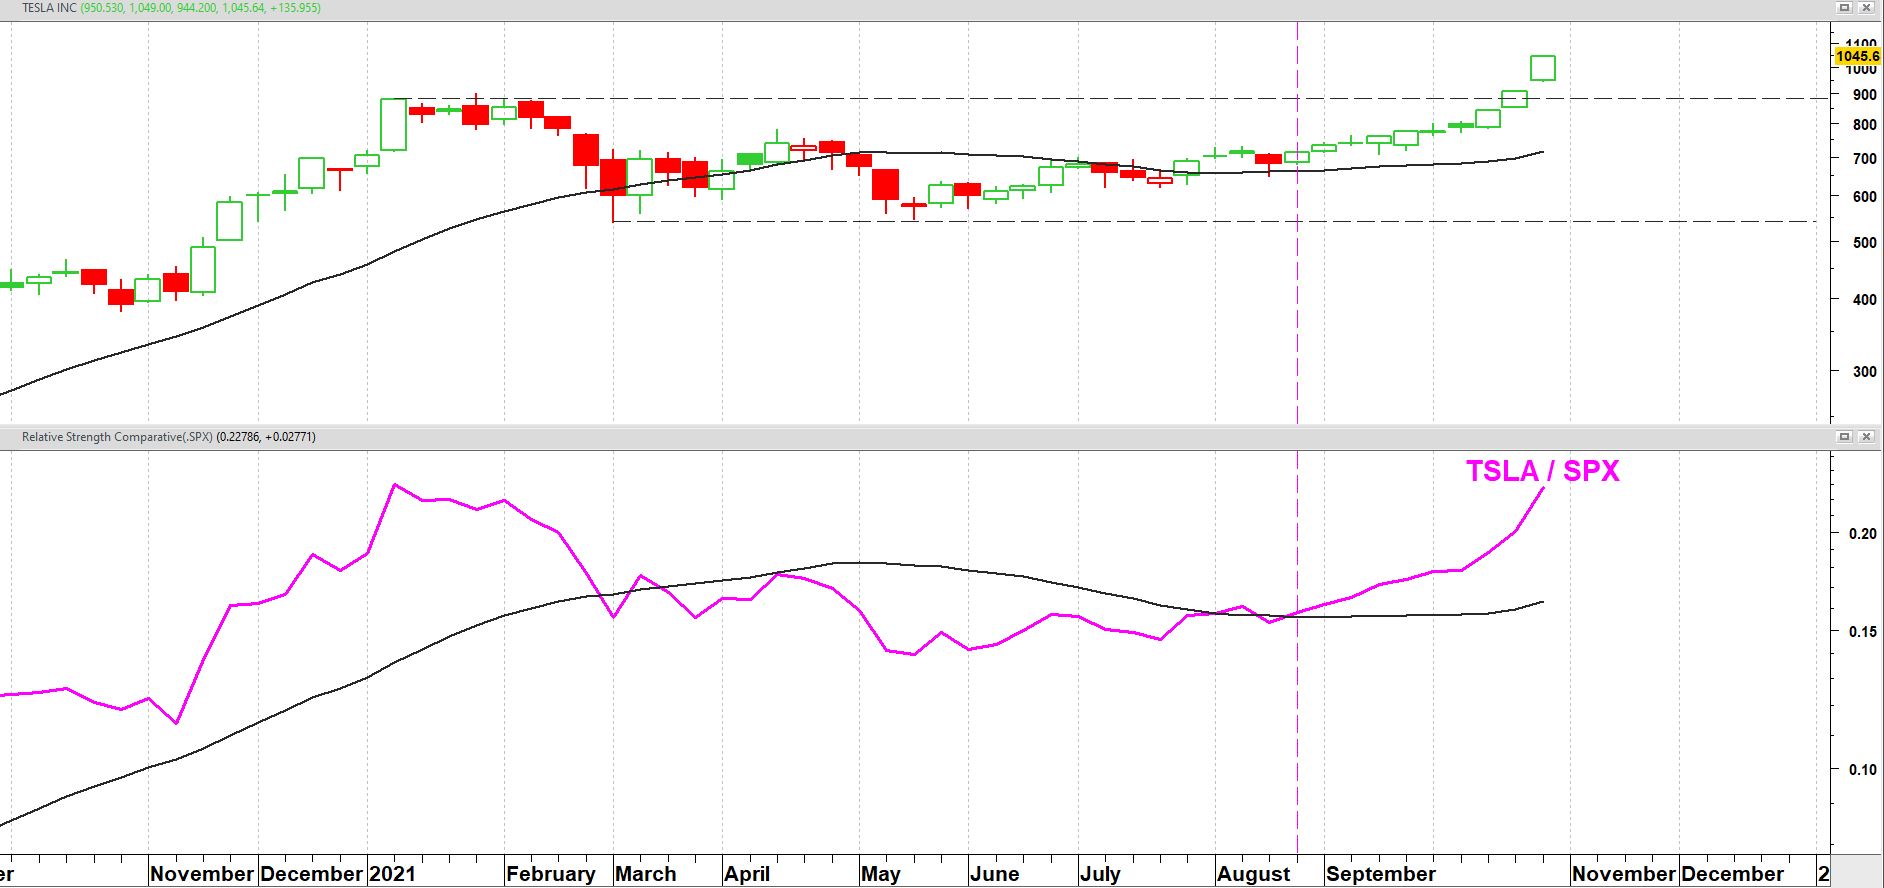 TESLA (TSLA) op weekbasis (log-chart) + 24-weeks gemiddelde + relatieve sterkte t.o.v. S&P 500 index